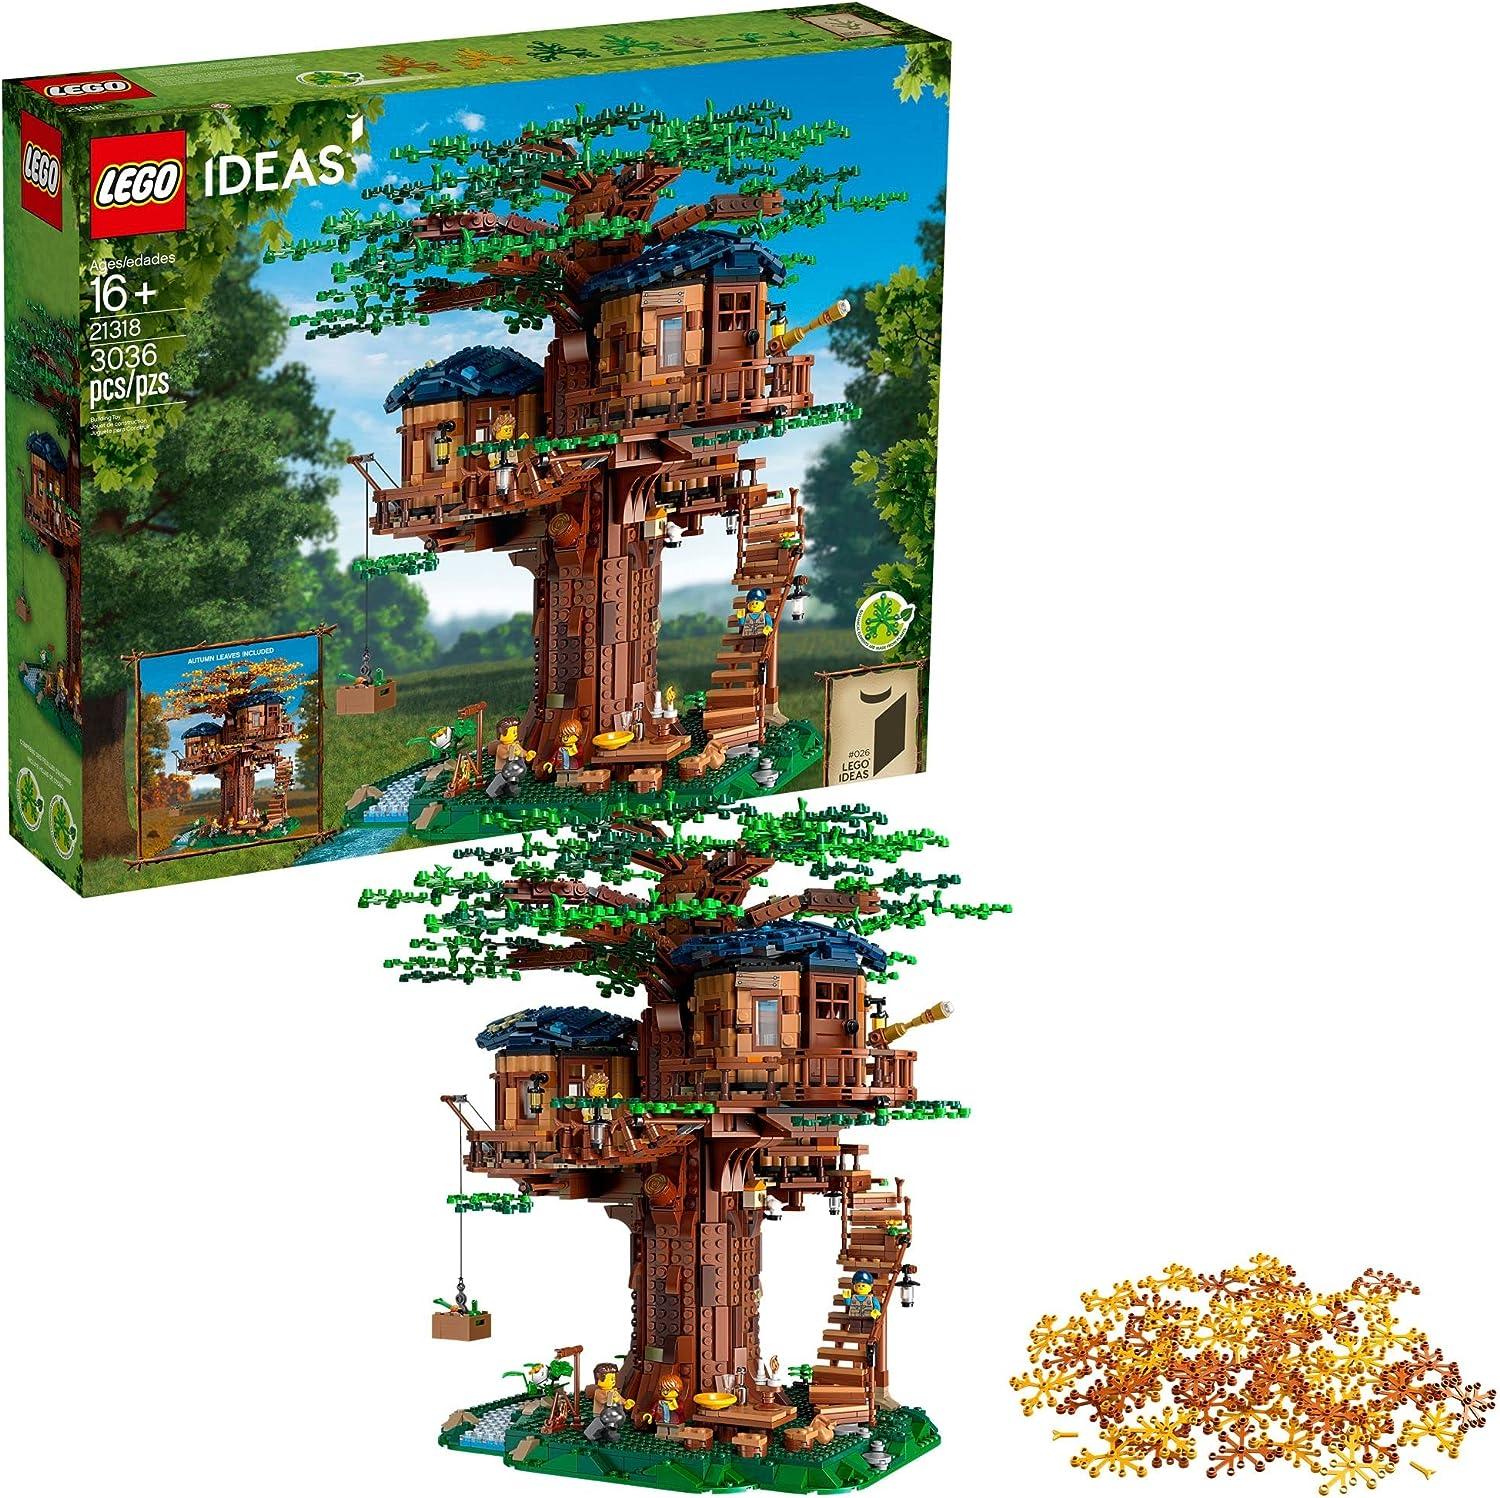 Lego Ideas Tree House 21318 Model Construction Set for $175 Shipped